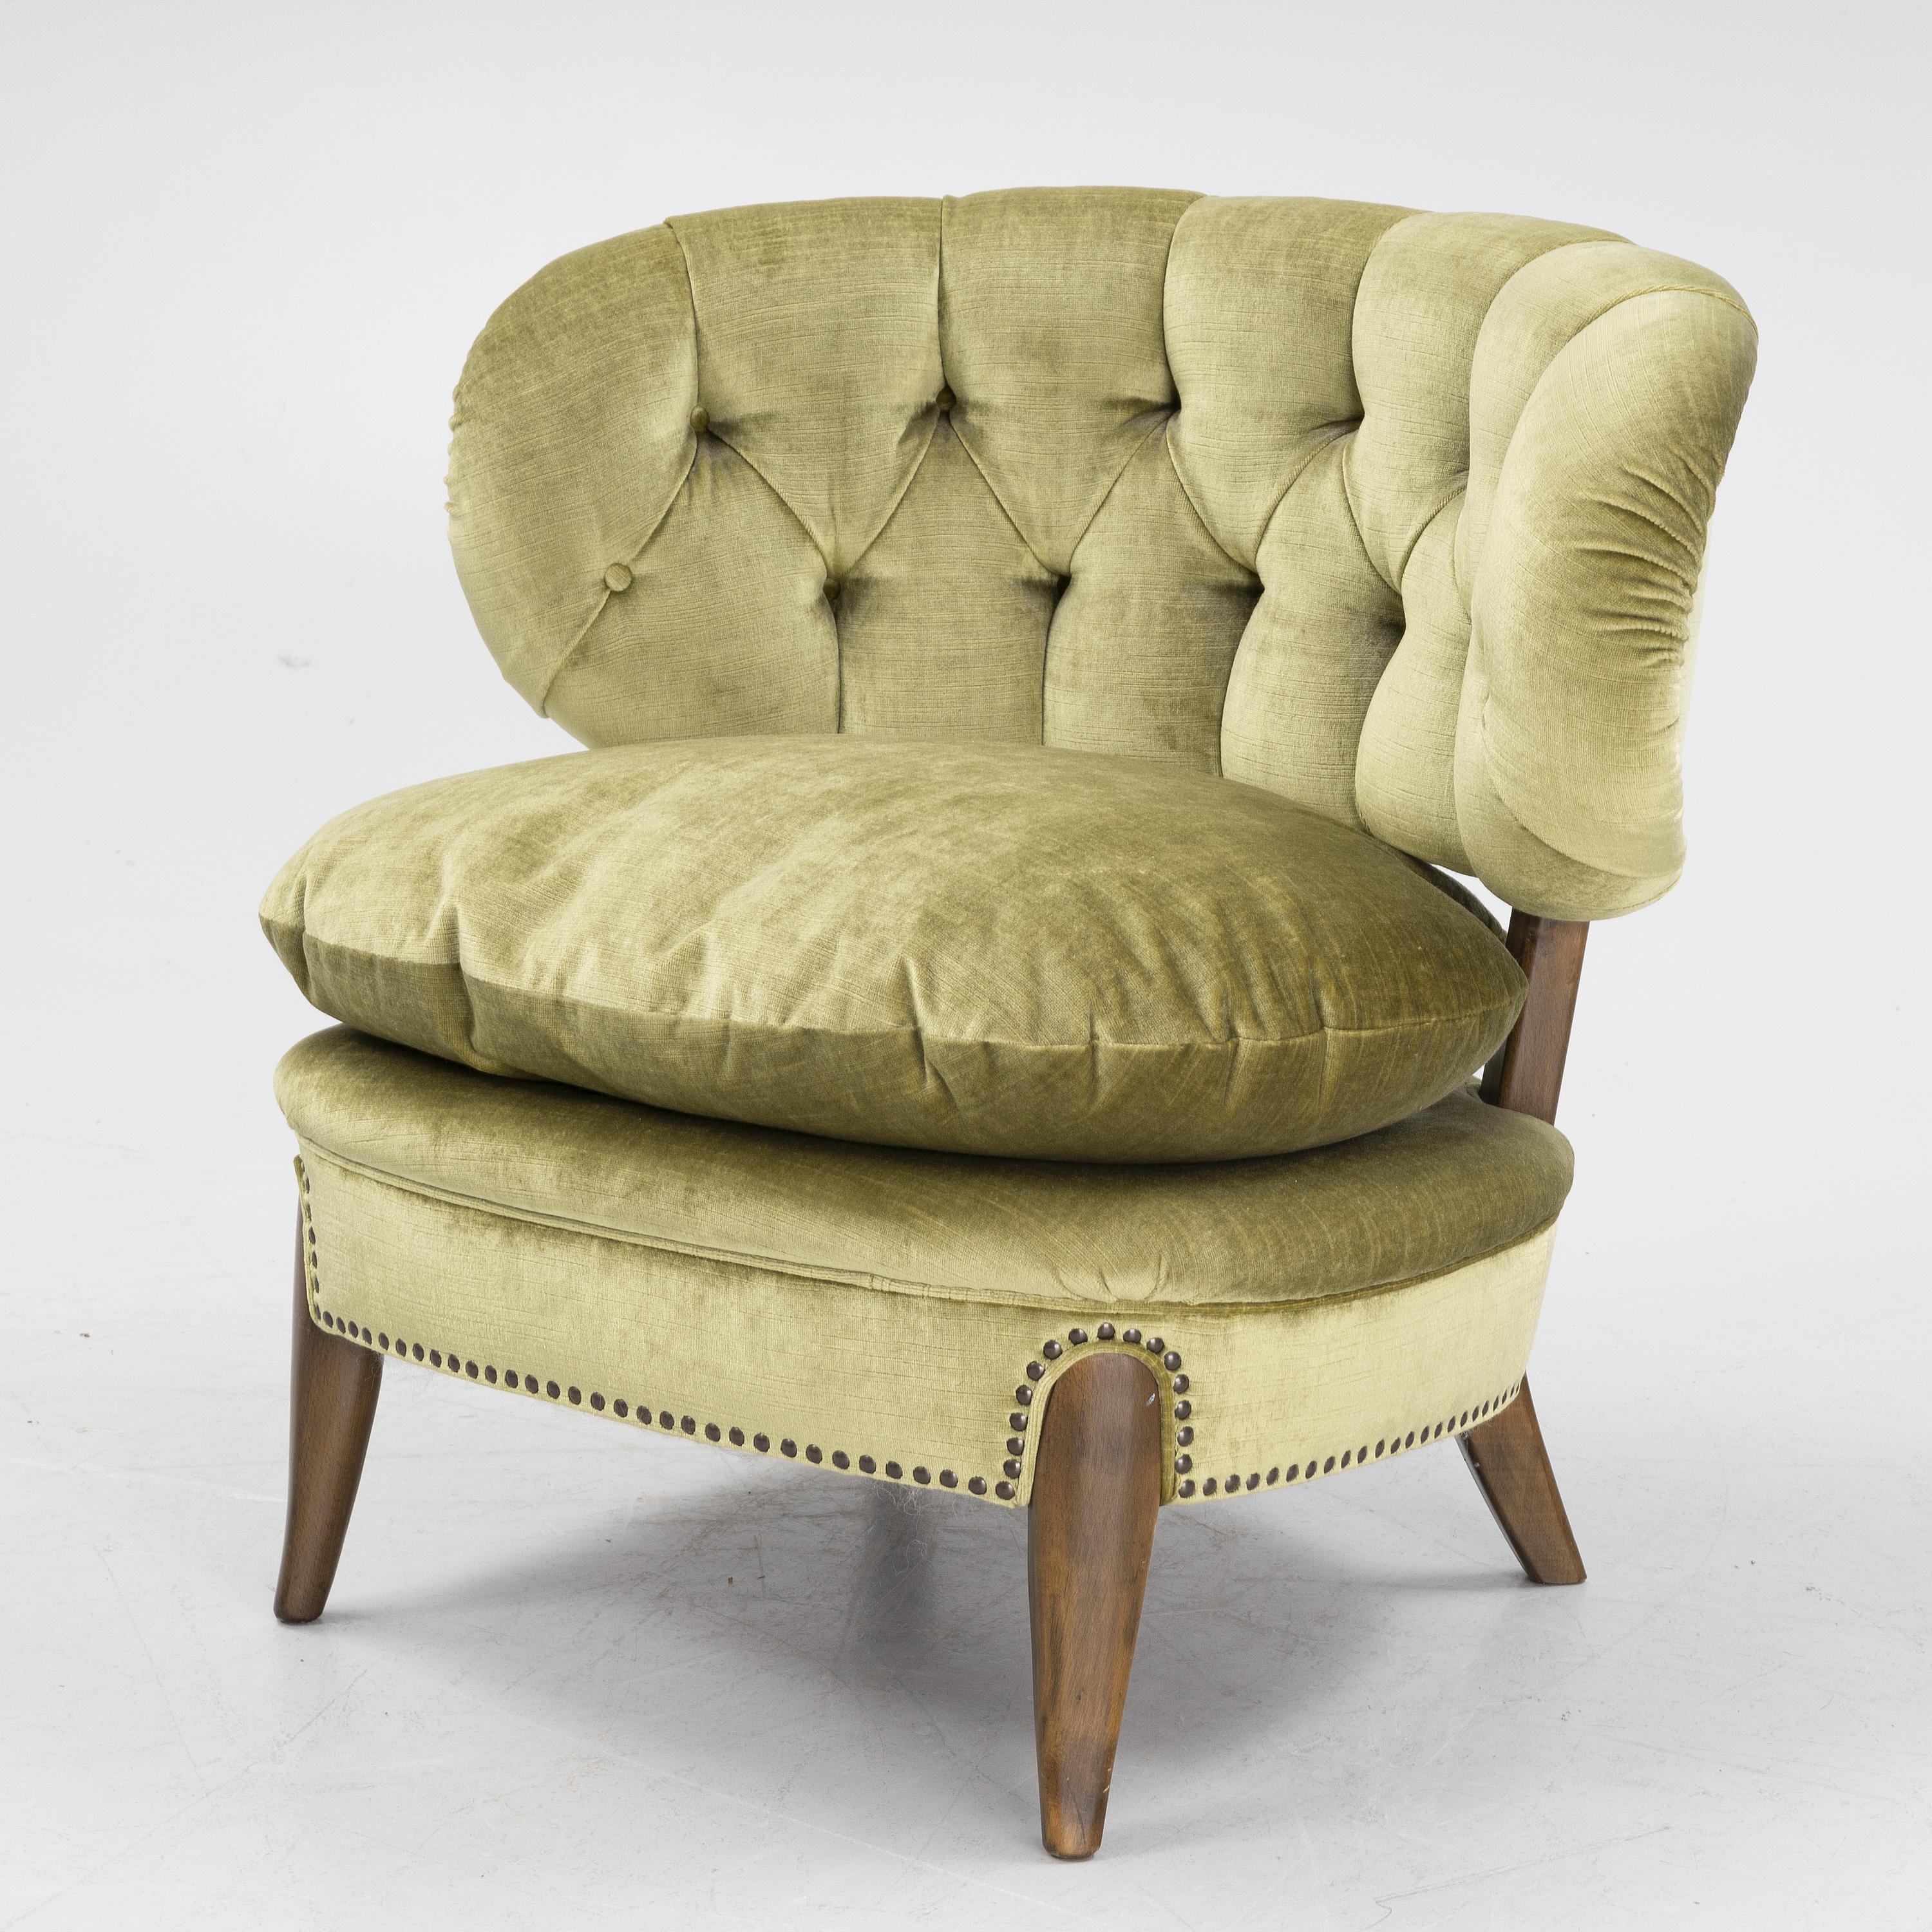 20th Century “Schulz” Lounge Chair by Otto Schulz for Jio Möbler Jönköping, Sweden, 1950 For Sale